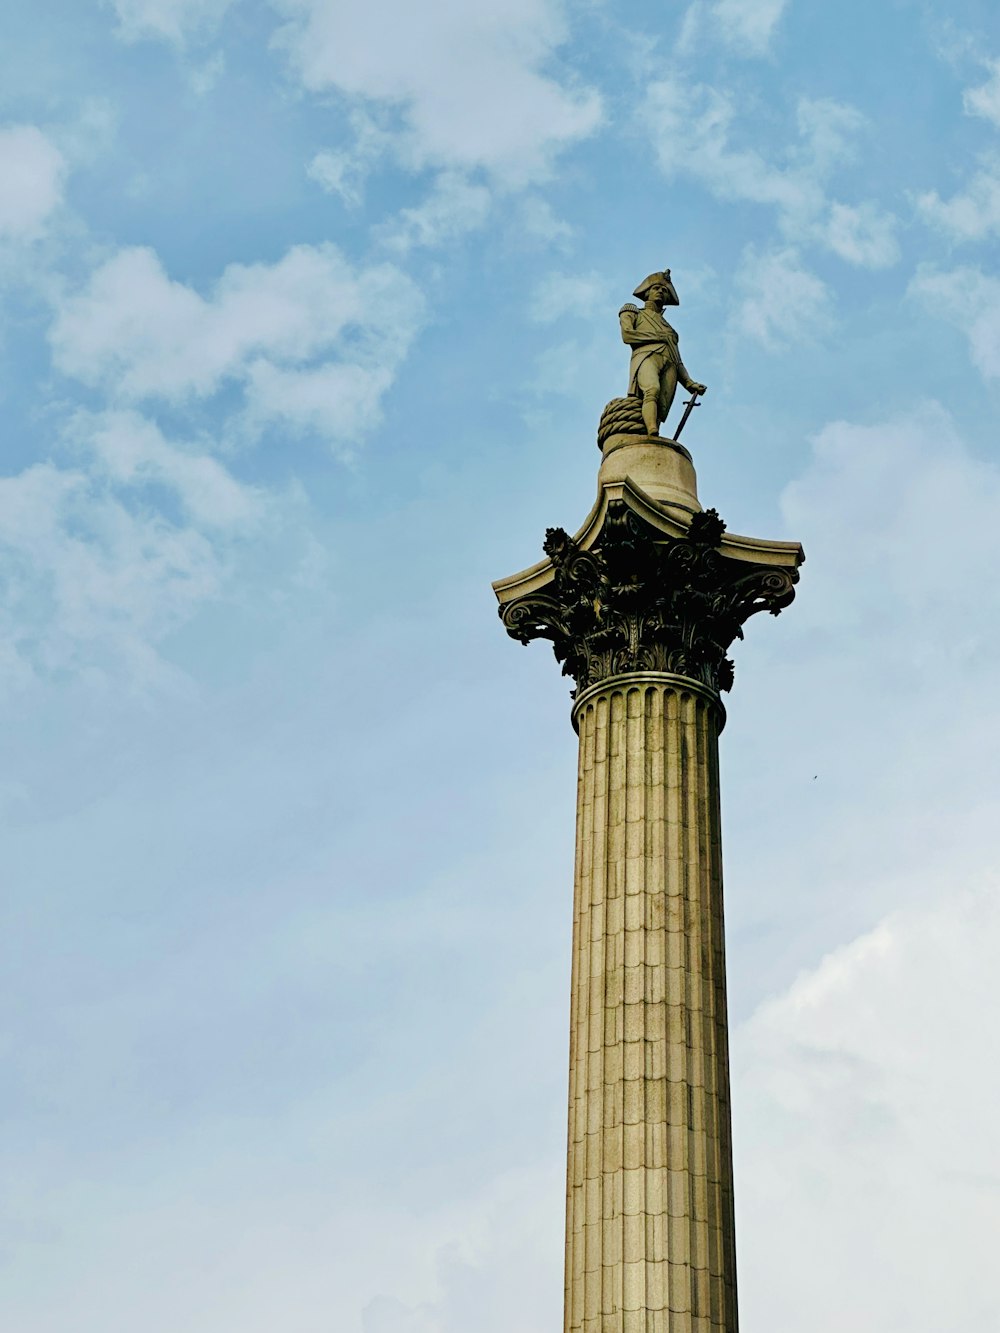 a statue of a man on top of a pillar